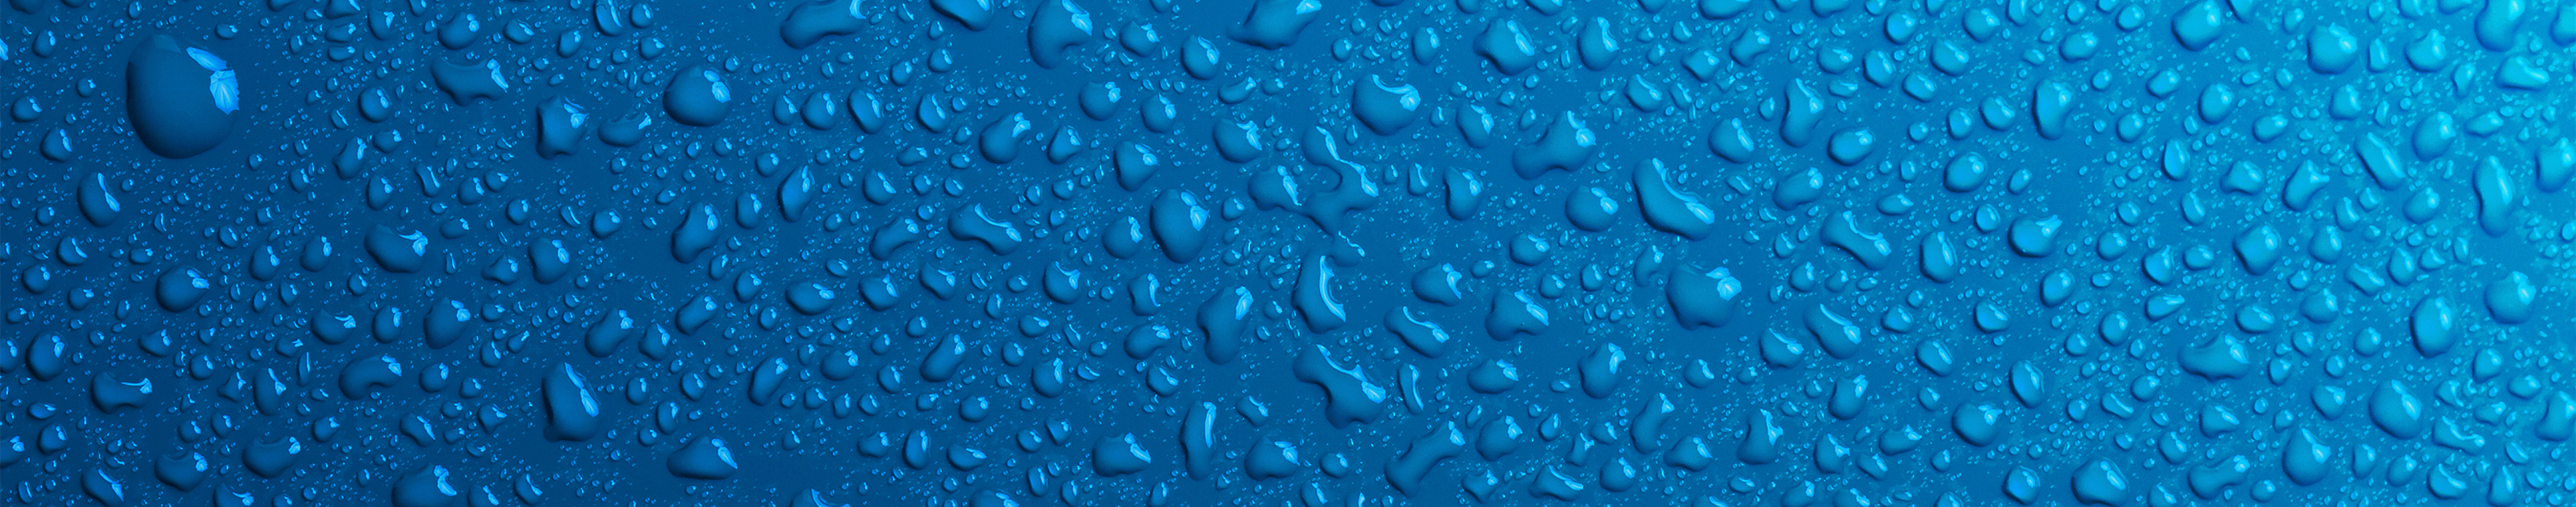 Water Drops 1